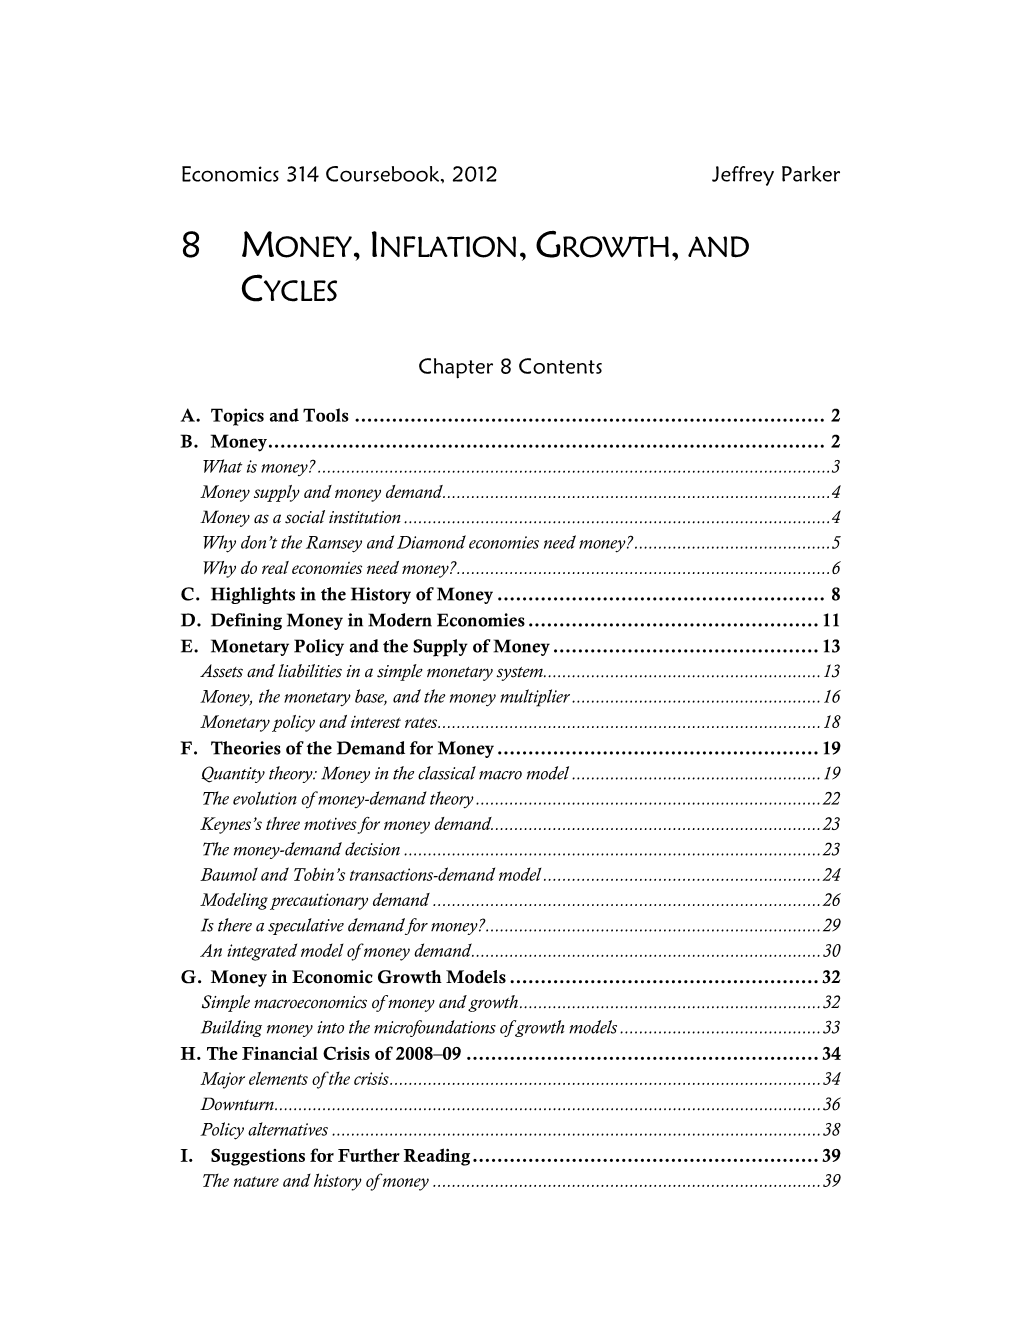 Economics 314 Coursebook, 1999